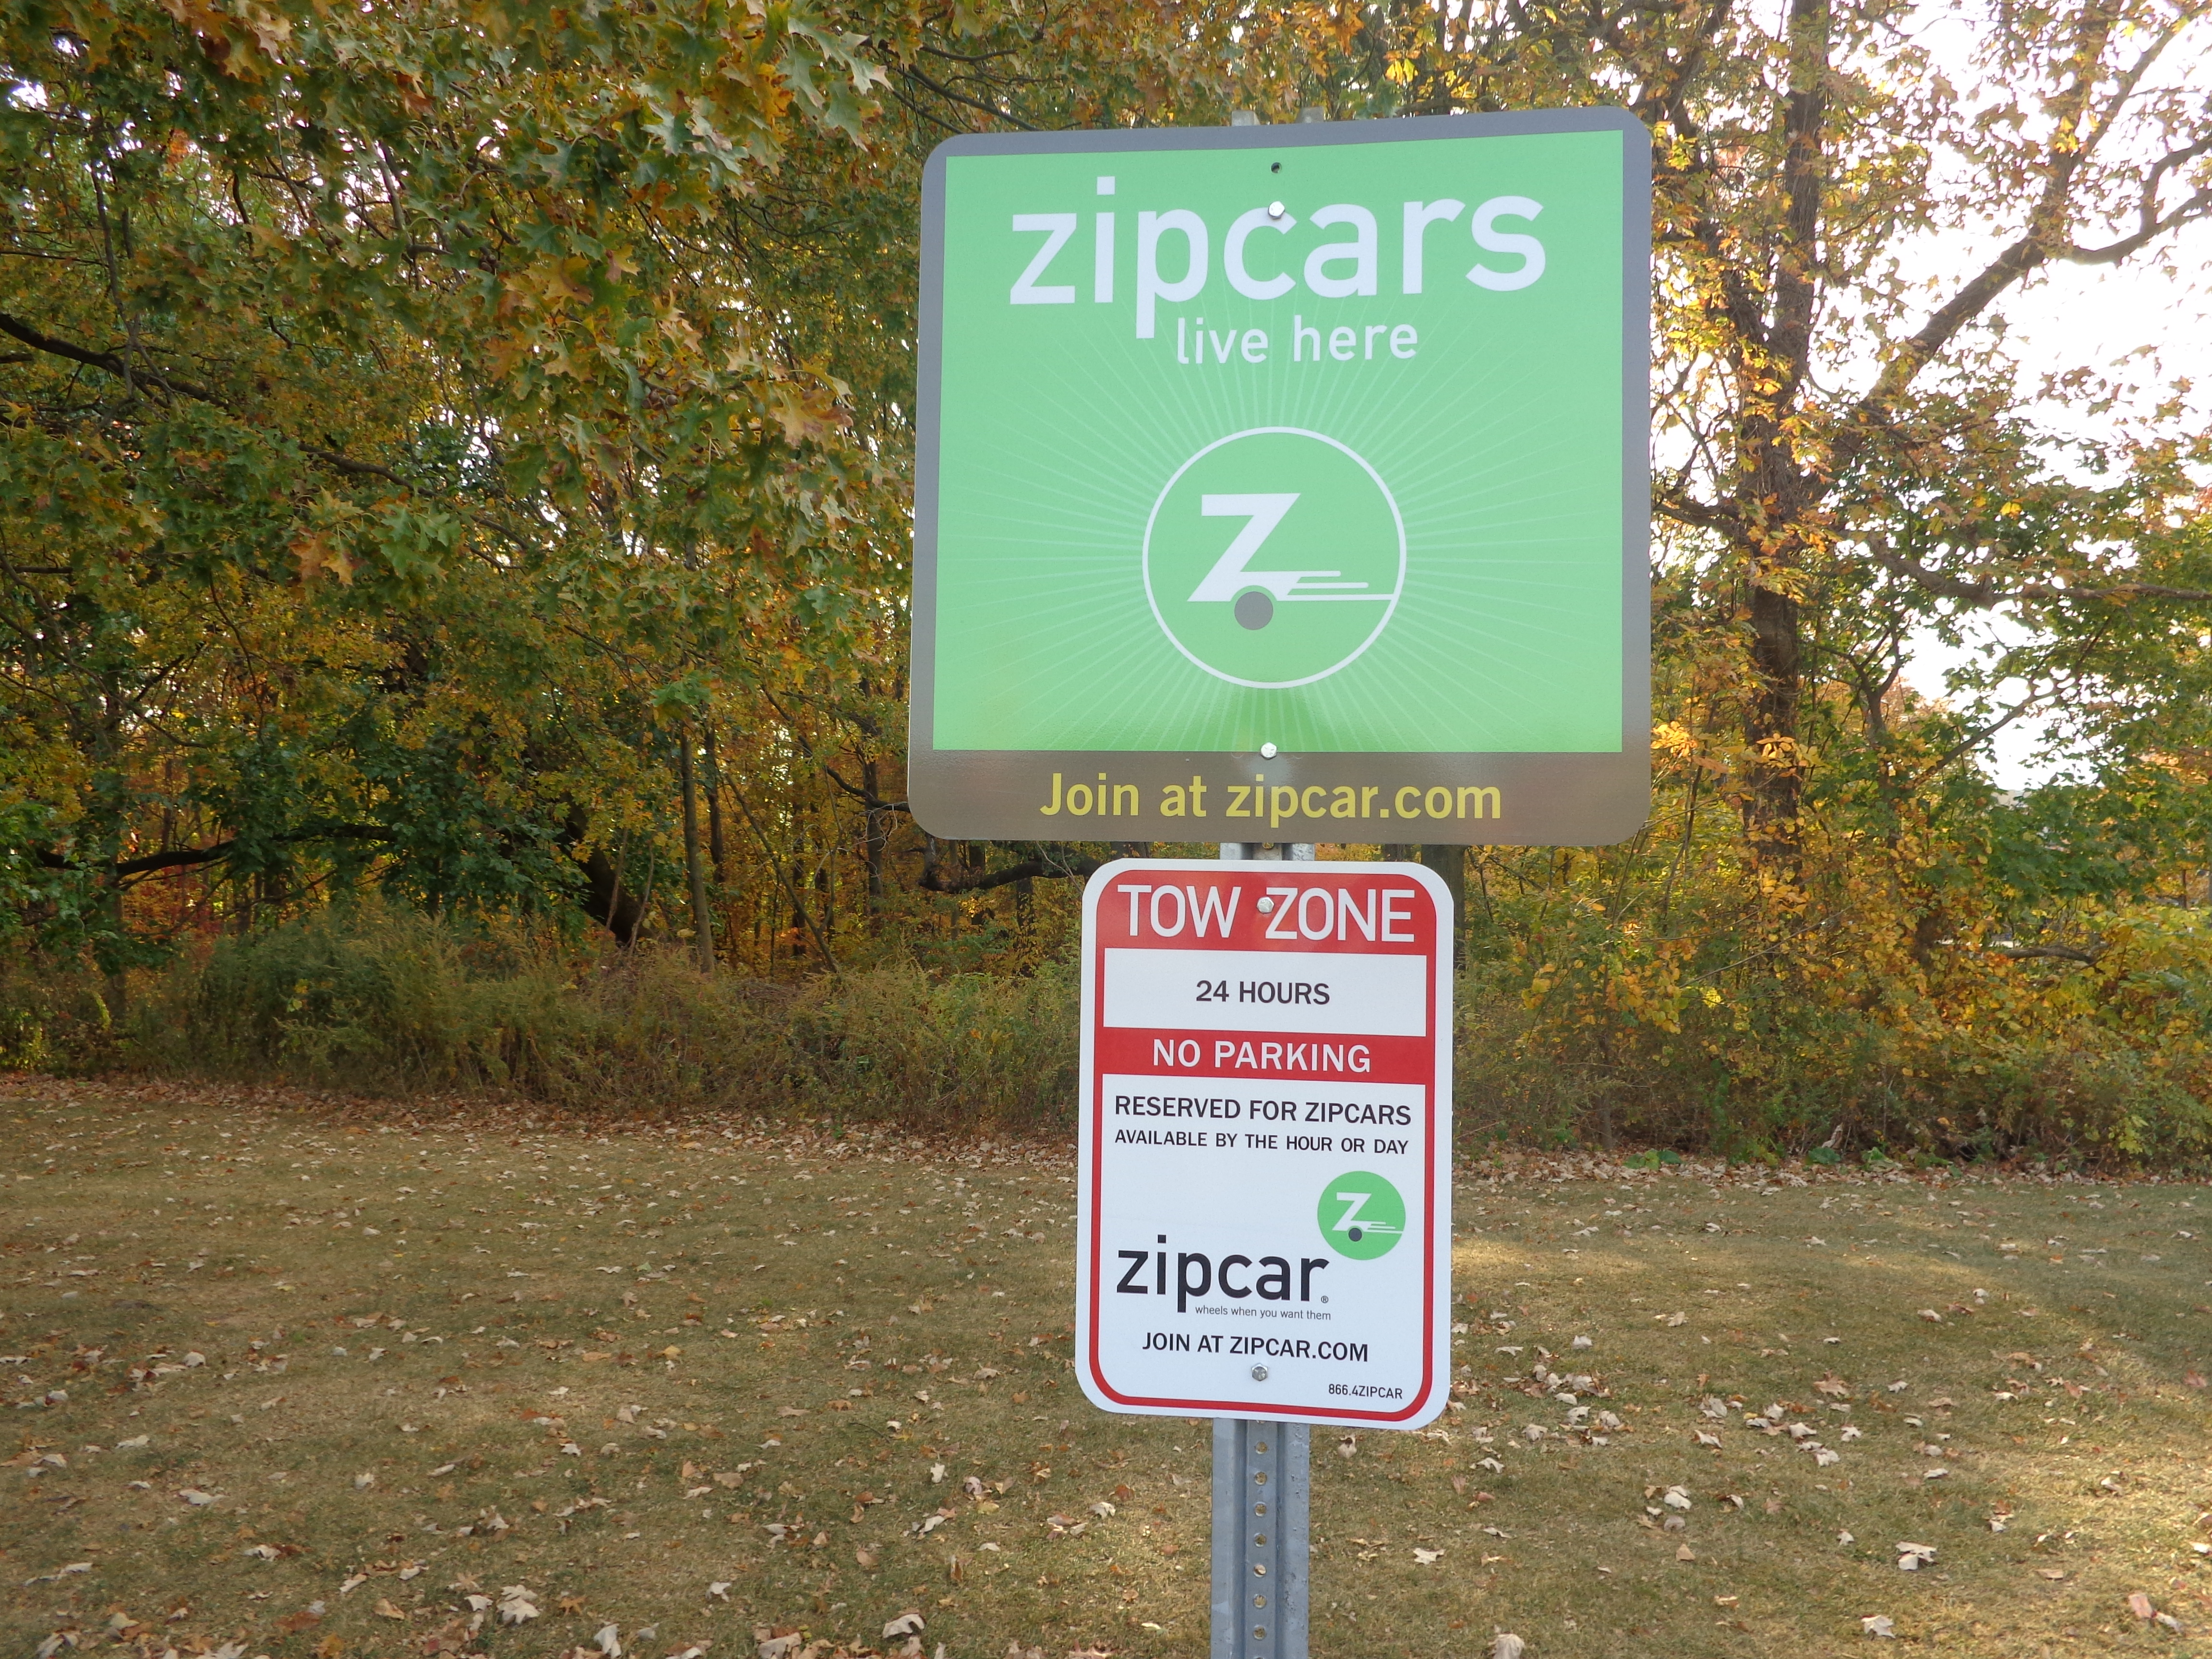 zipcar university